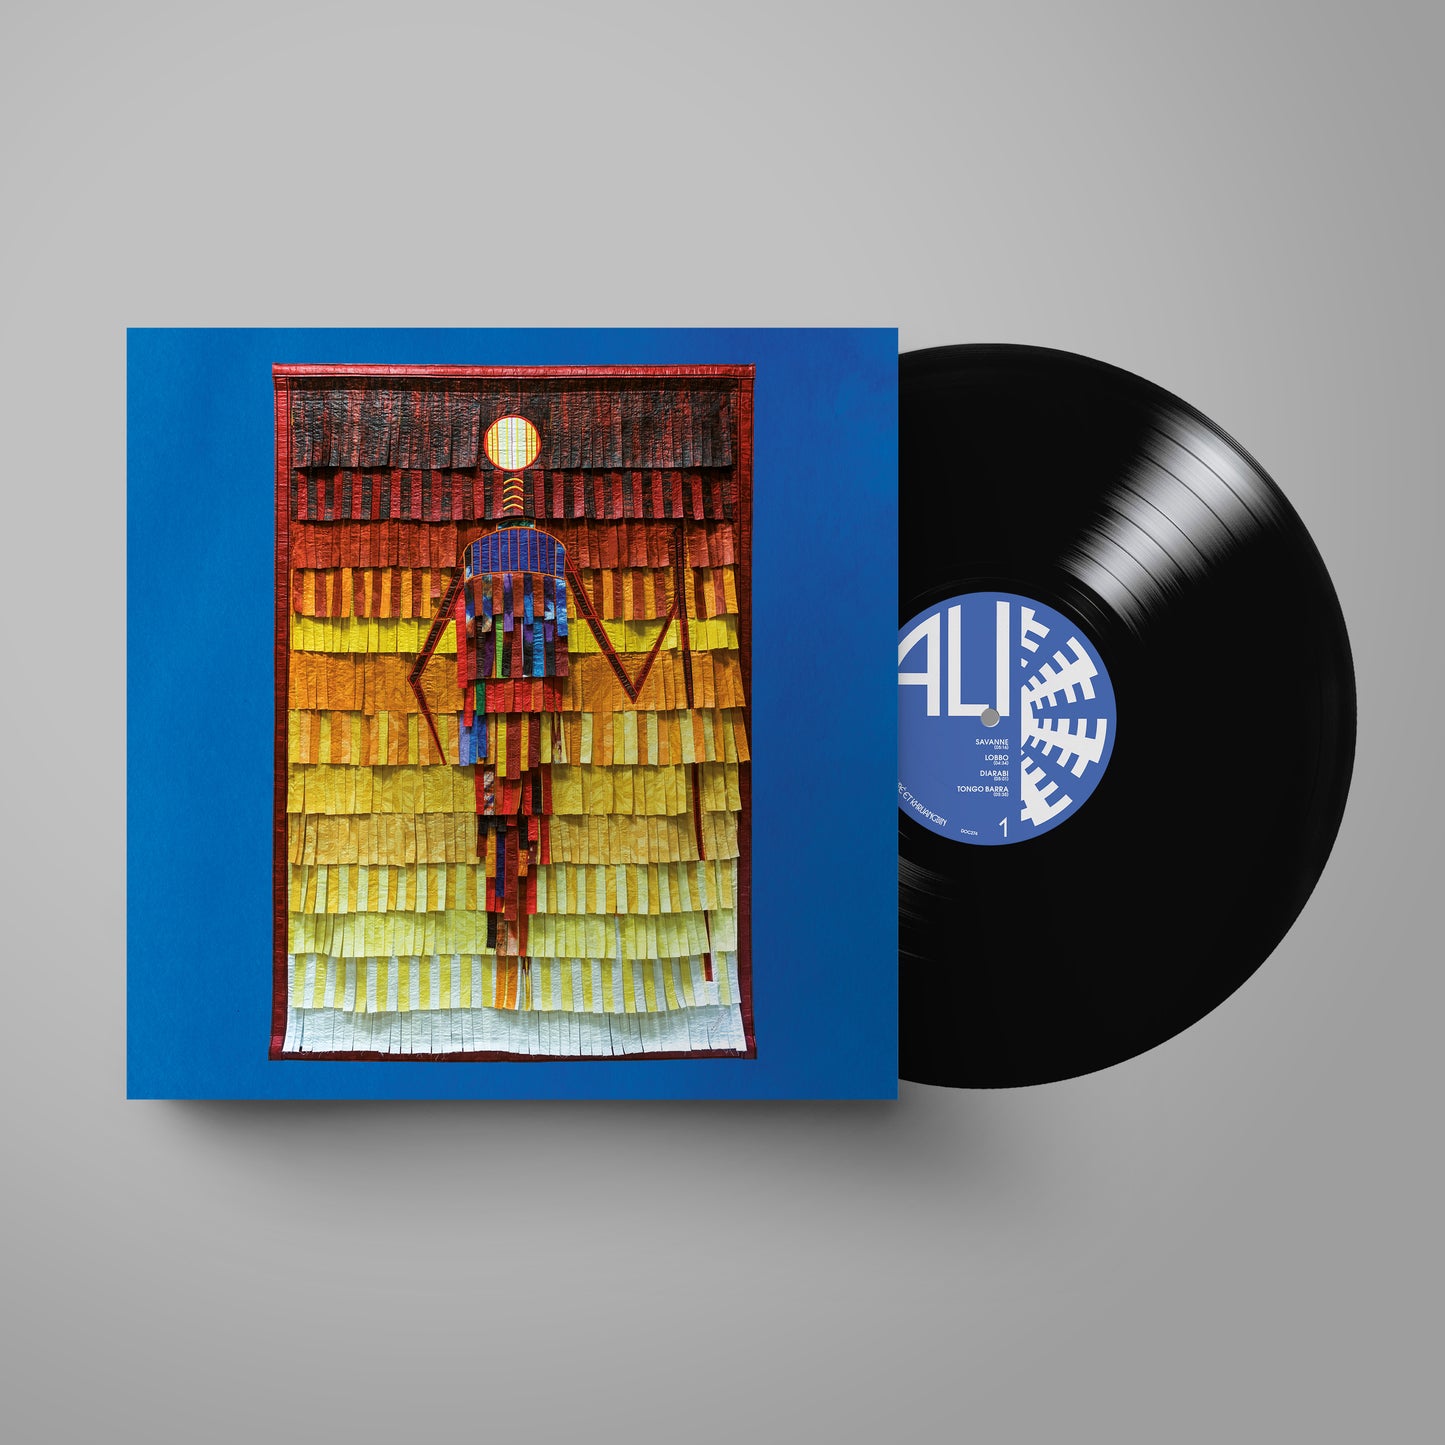 Vieux Farka Touré & Khruangbin 'Ali' LP